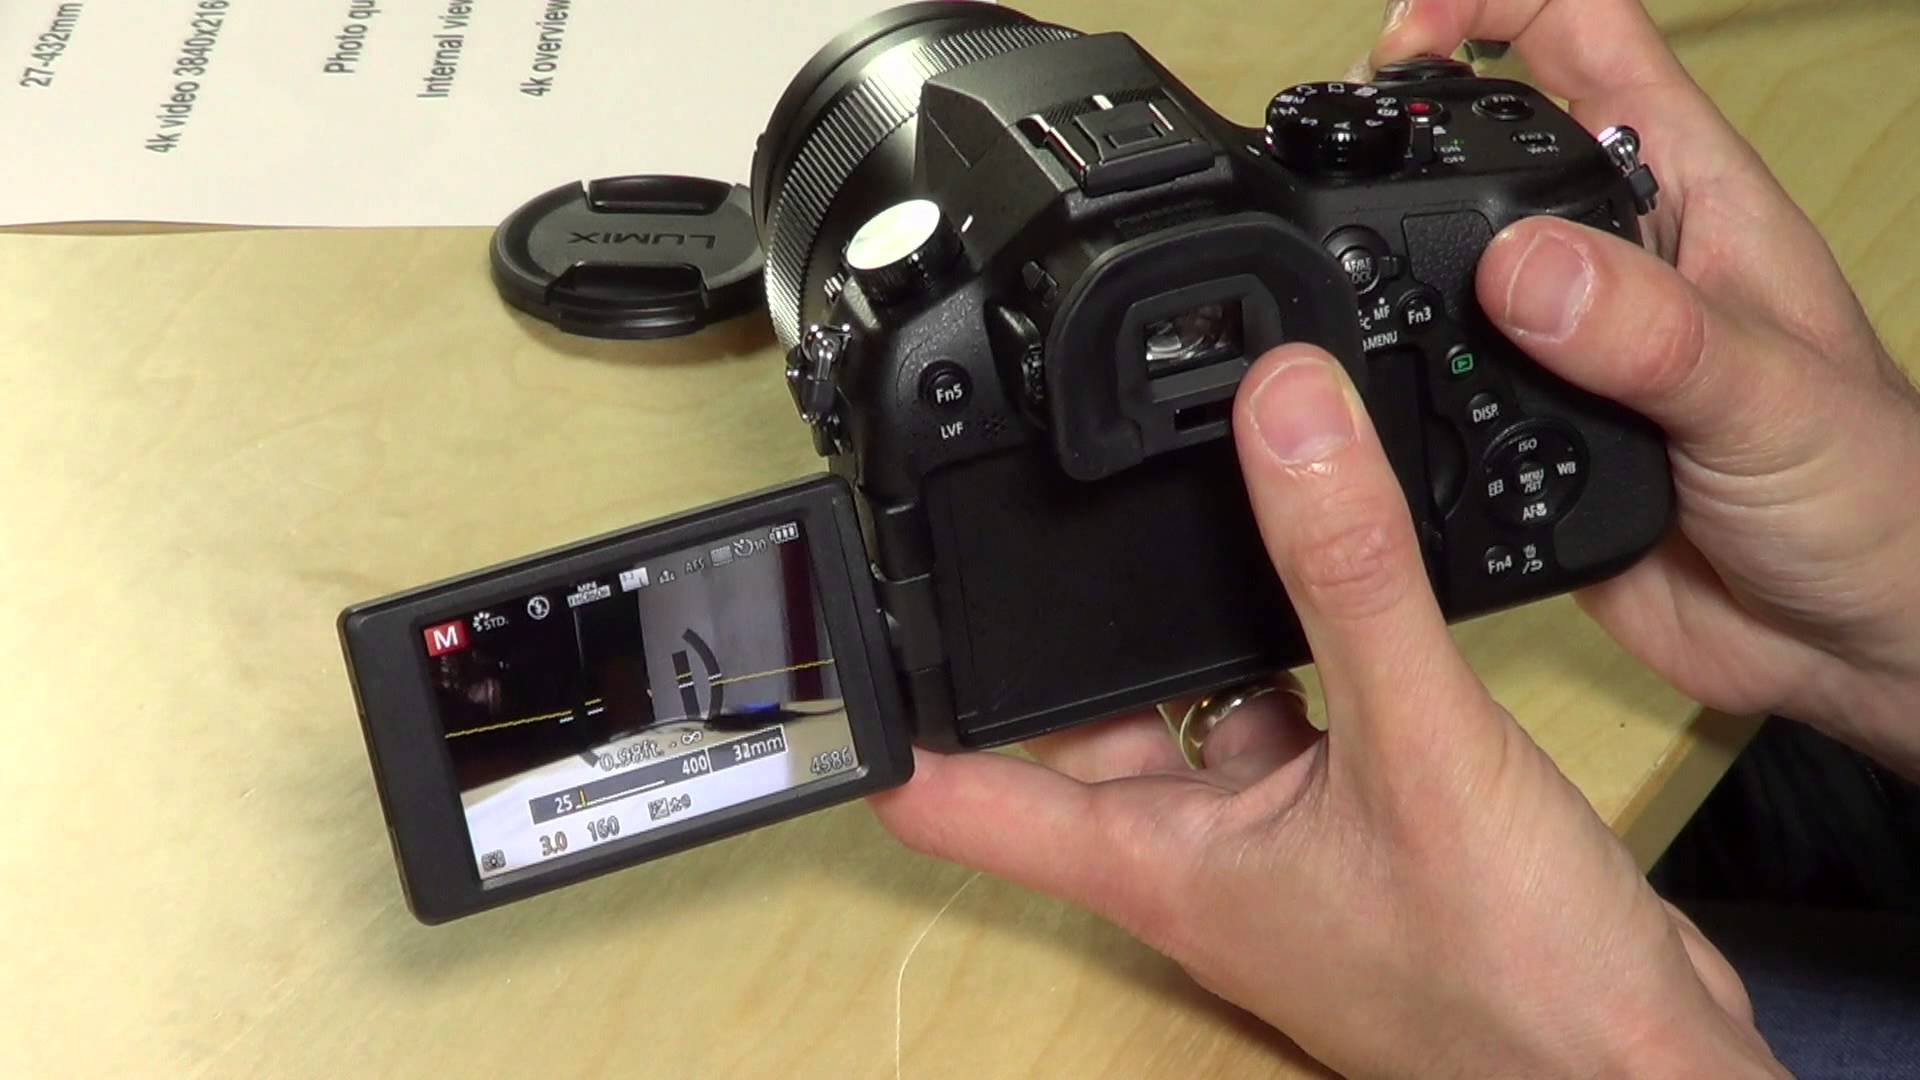 Panasonic Lumix FZ-1000 Camera Review – 4k Video Samples, Image Quality, and More